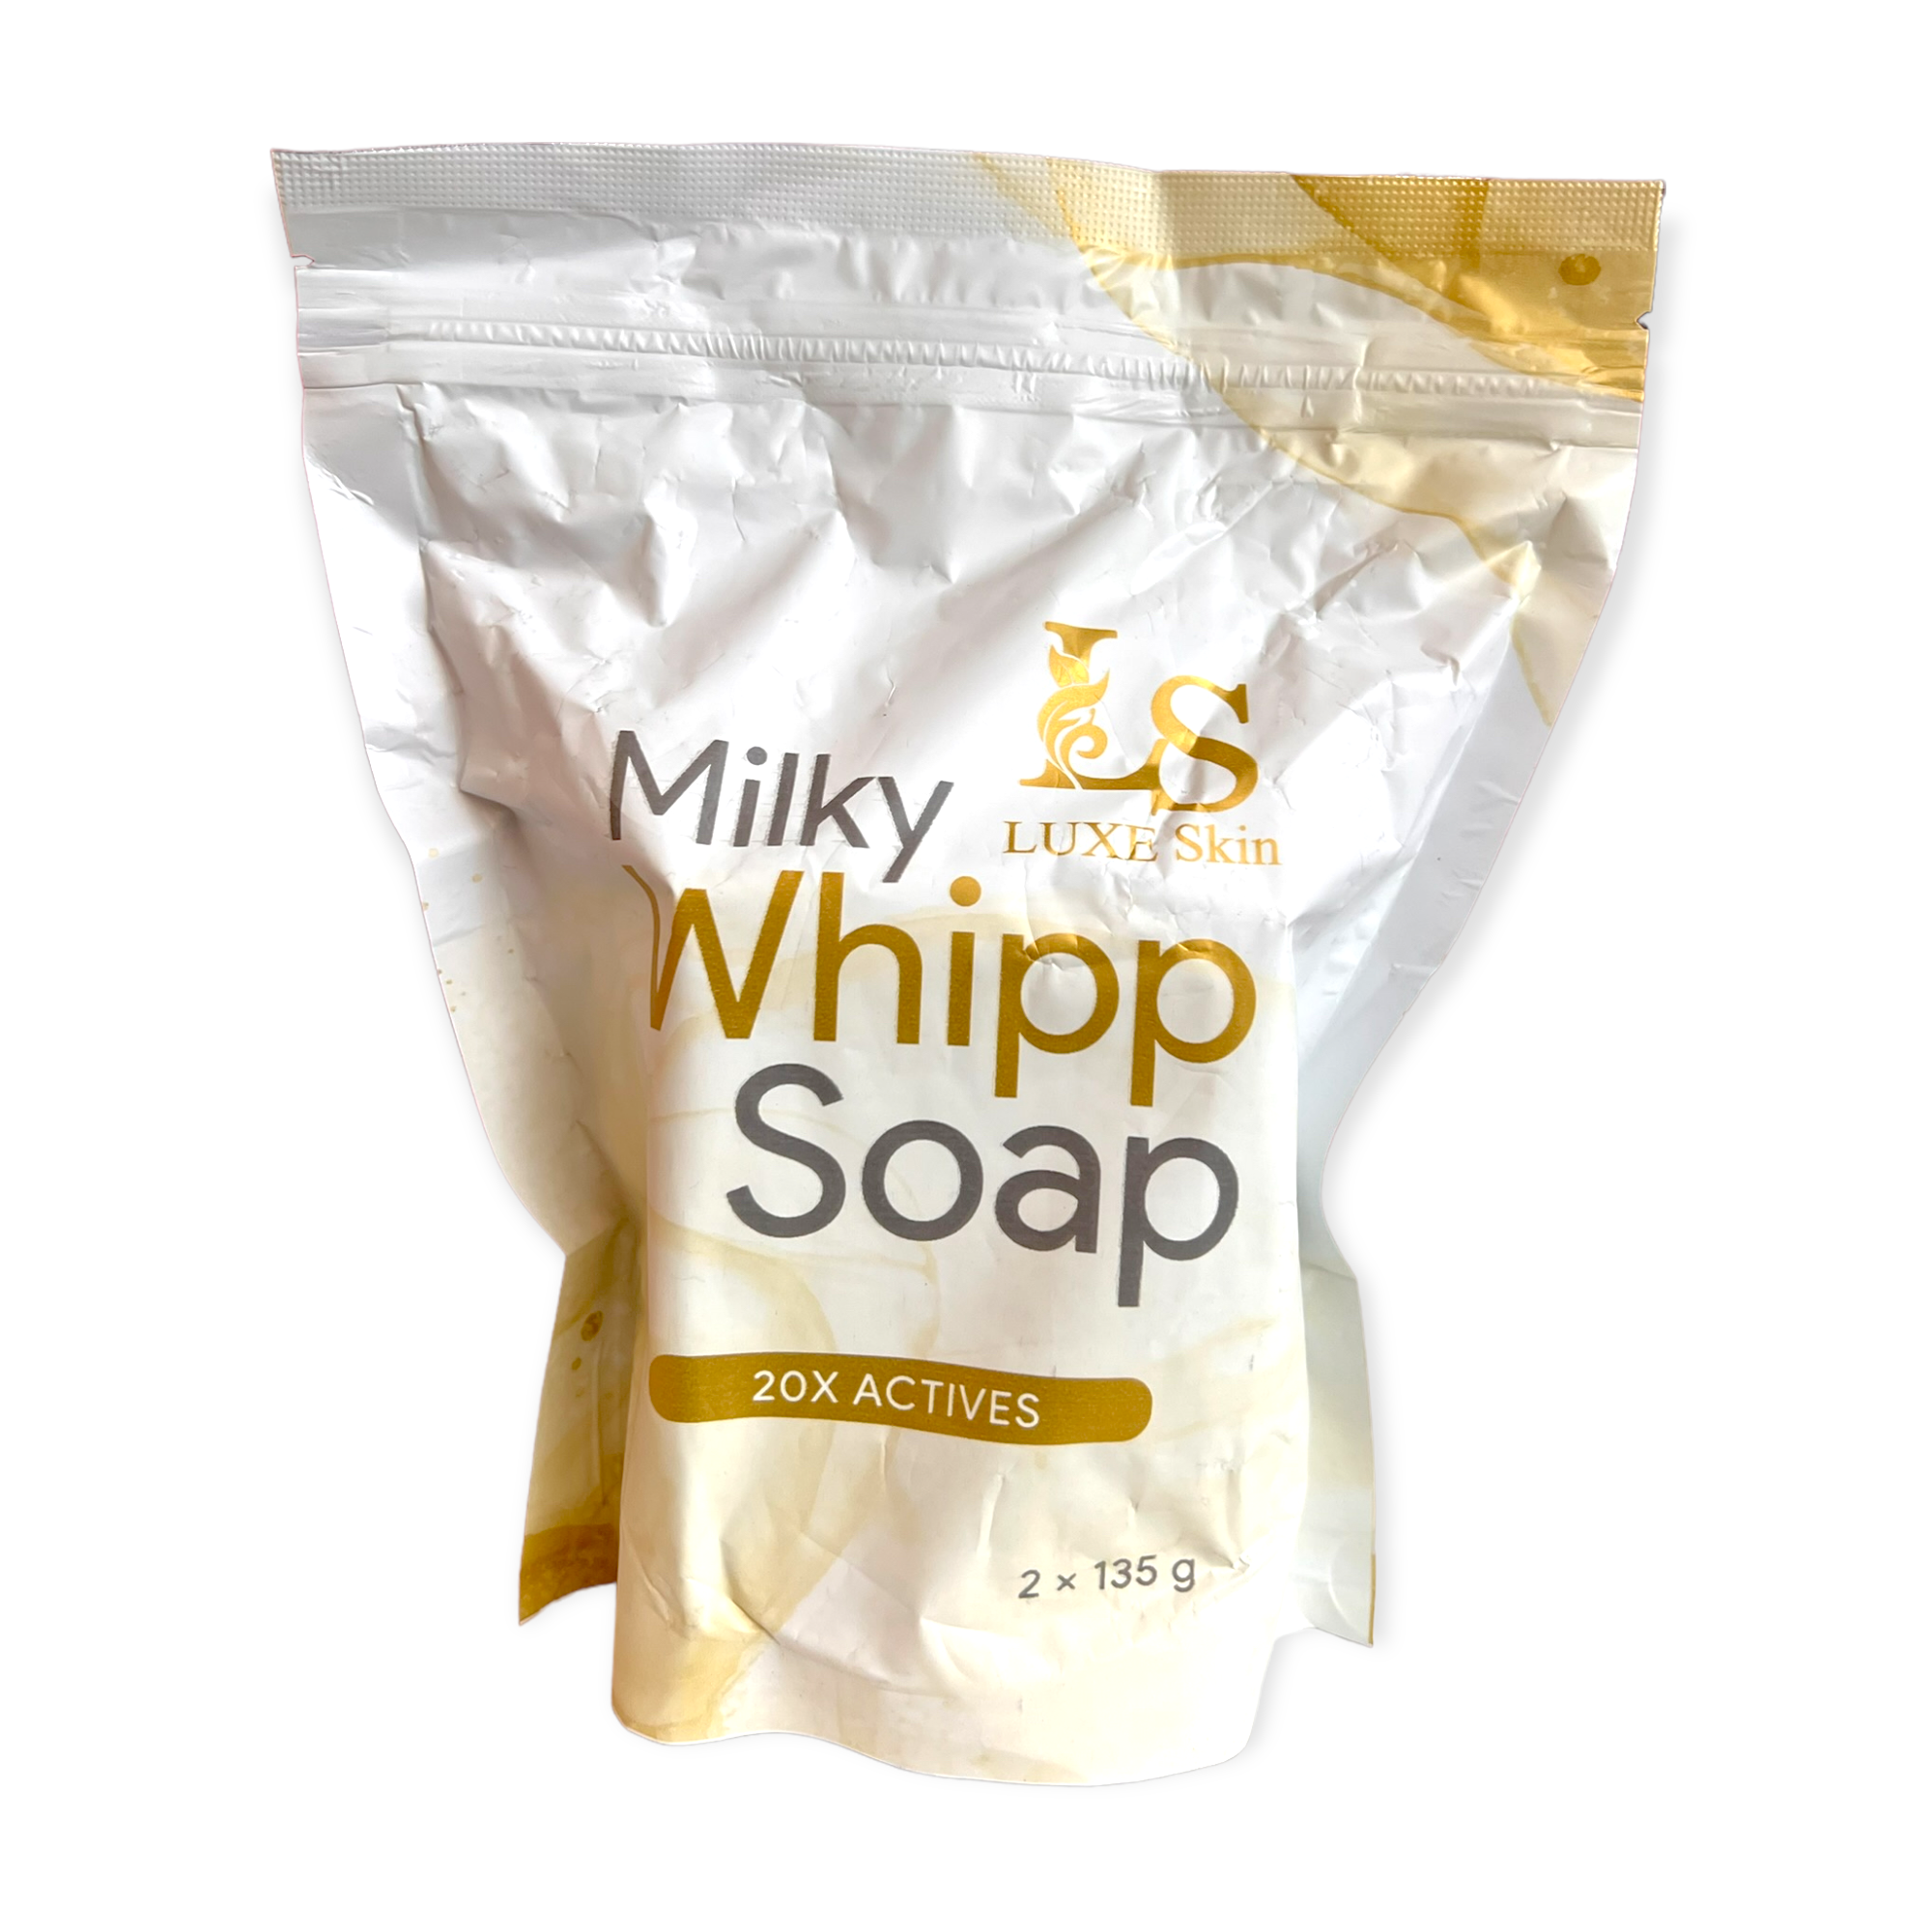 Luxe Skin Milky Whipp Soap 2 x 135g